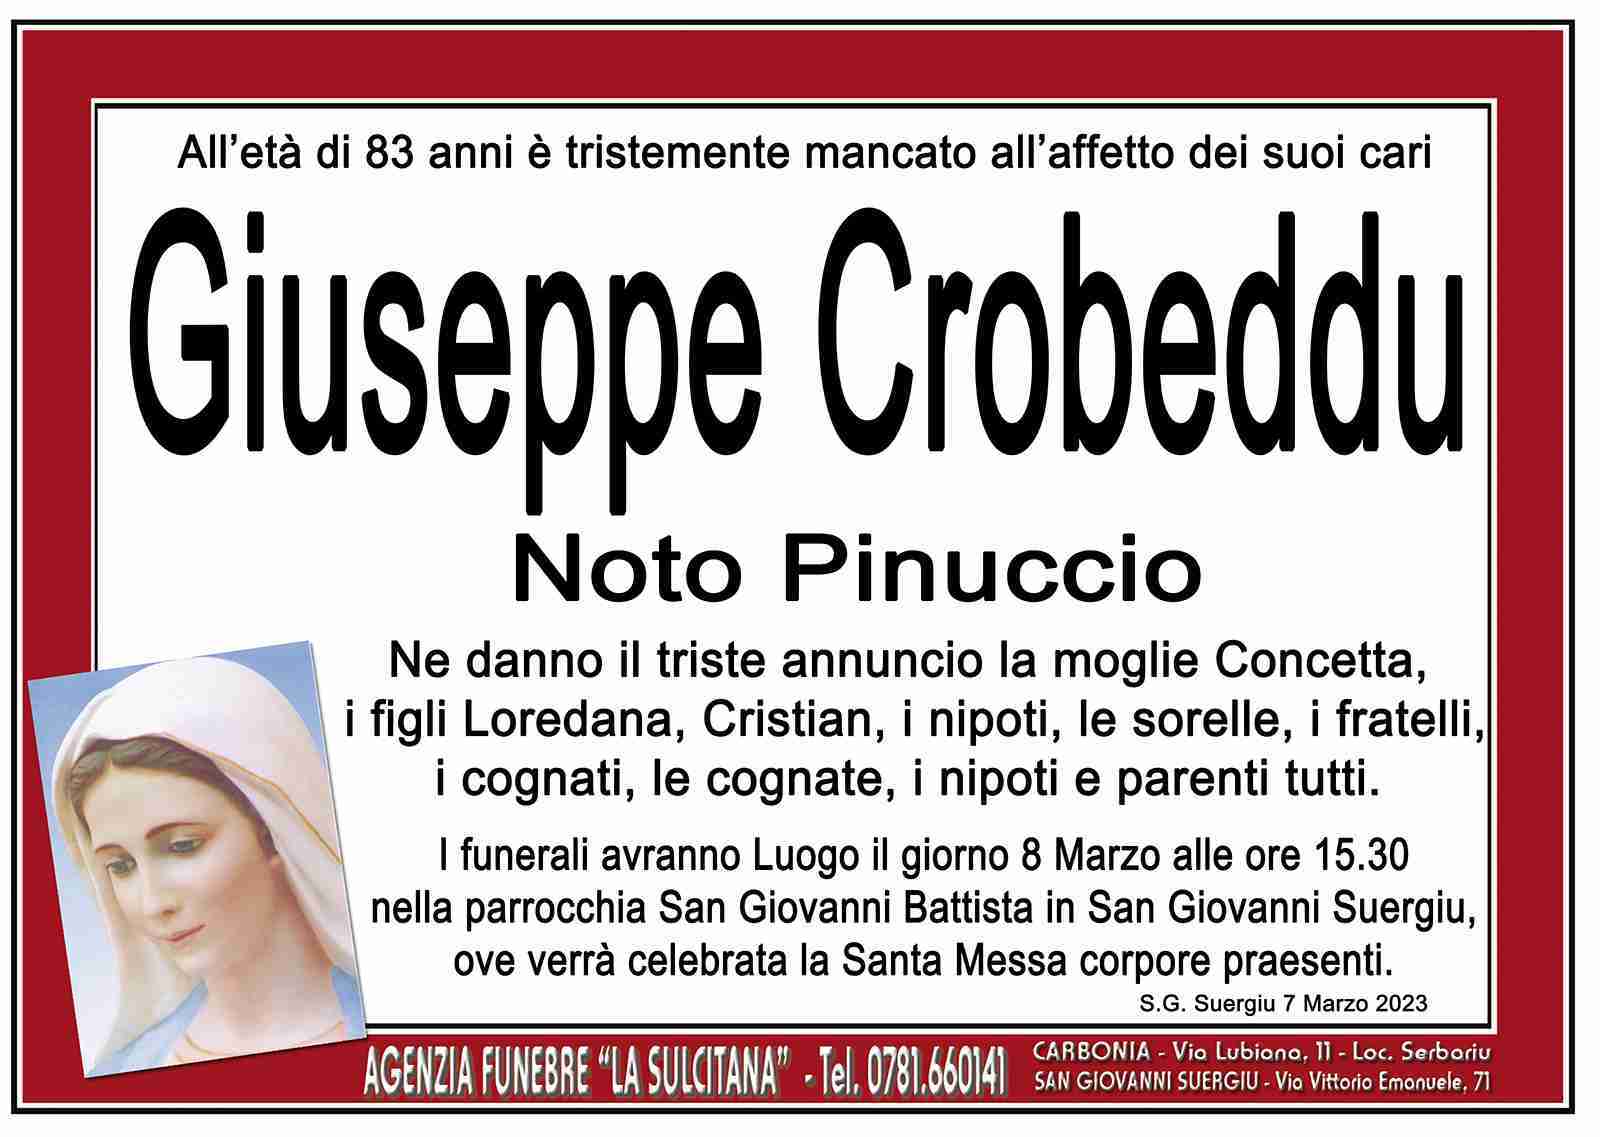 Giuseppe Crobeddu